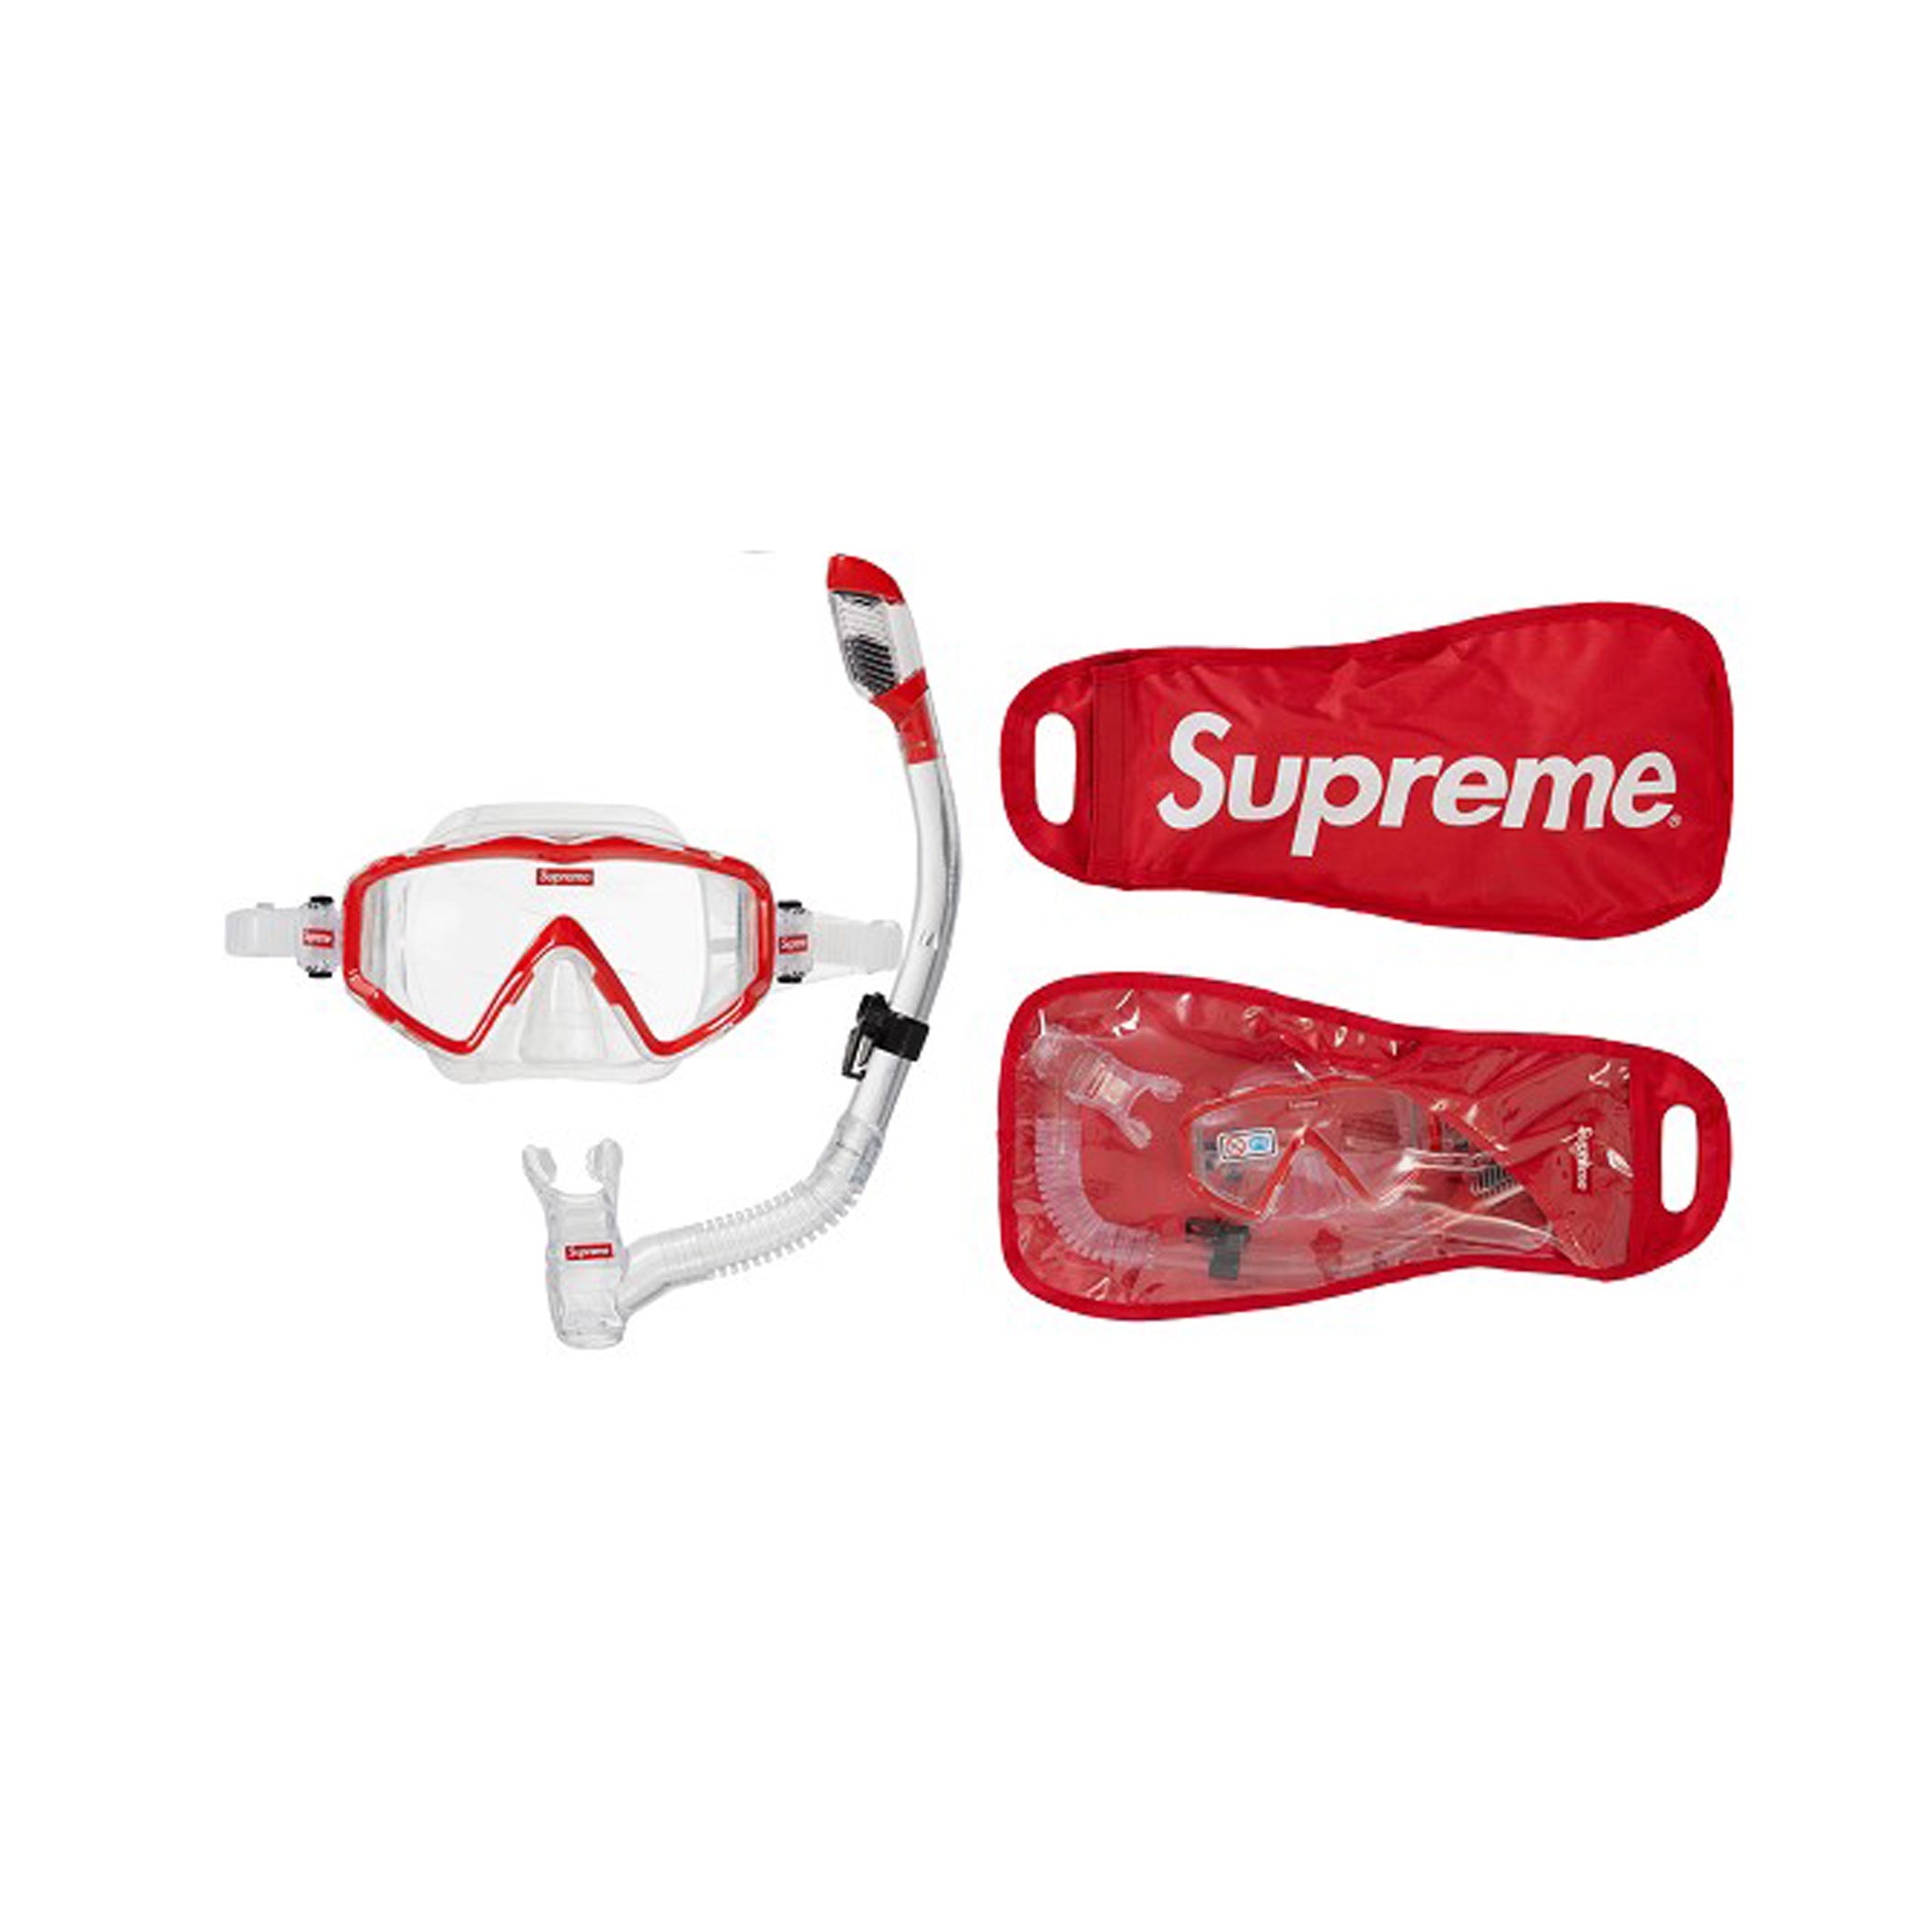 Supreme®/Cressi Snorkel Set